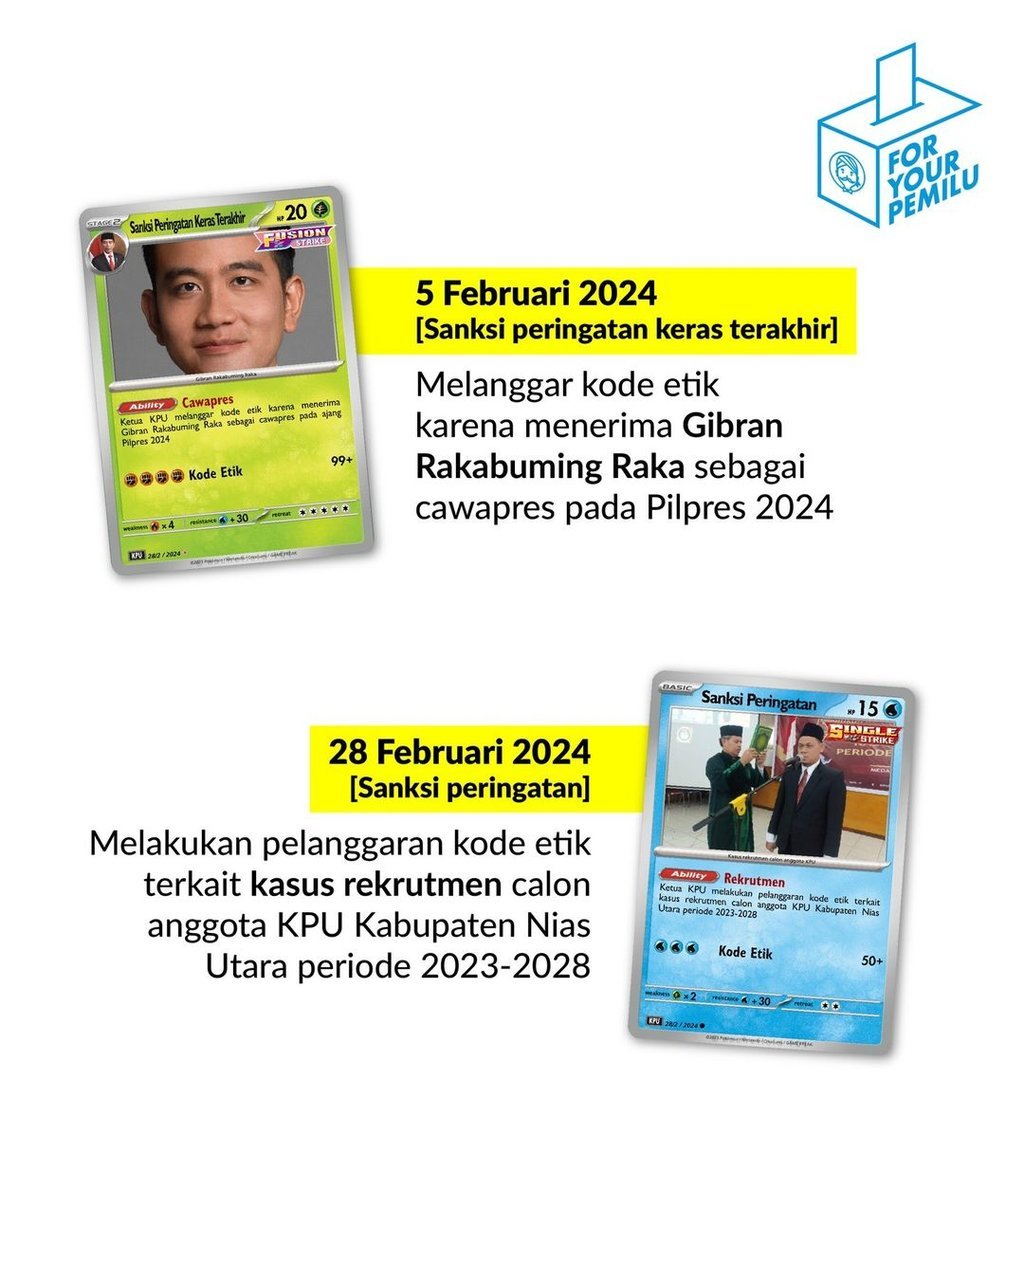 Ini dia jajaran lima kartu favorit ketua KPU, Hasyim Asy'ari. Kira-kira bakal lanjut lagi gak ya gachanya? Kali mau nambah koleksi~ #KenalPemilw